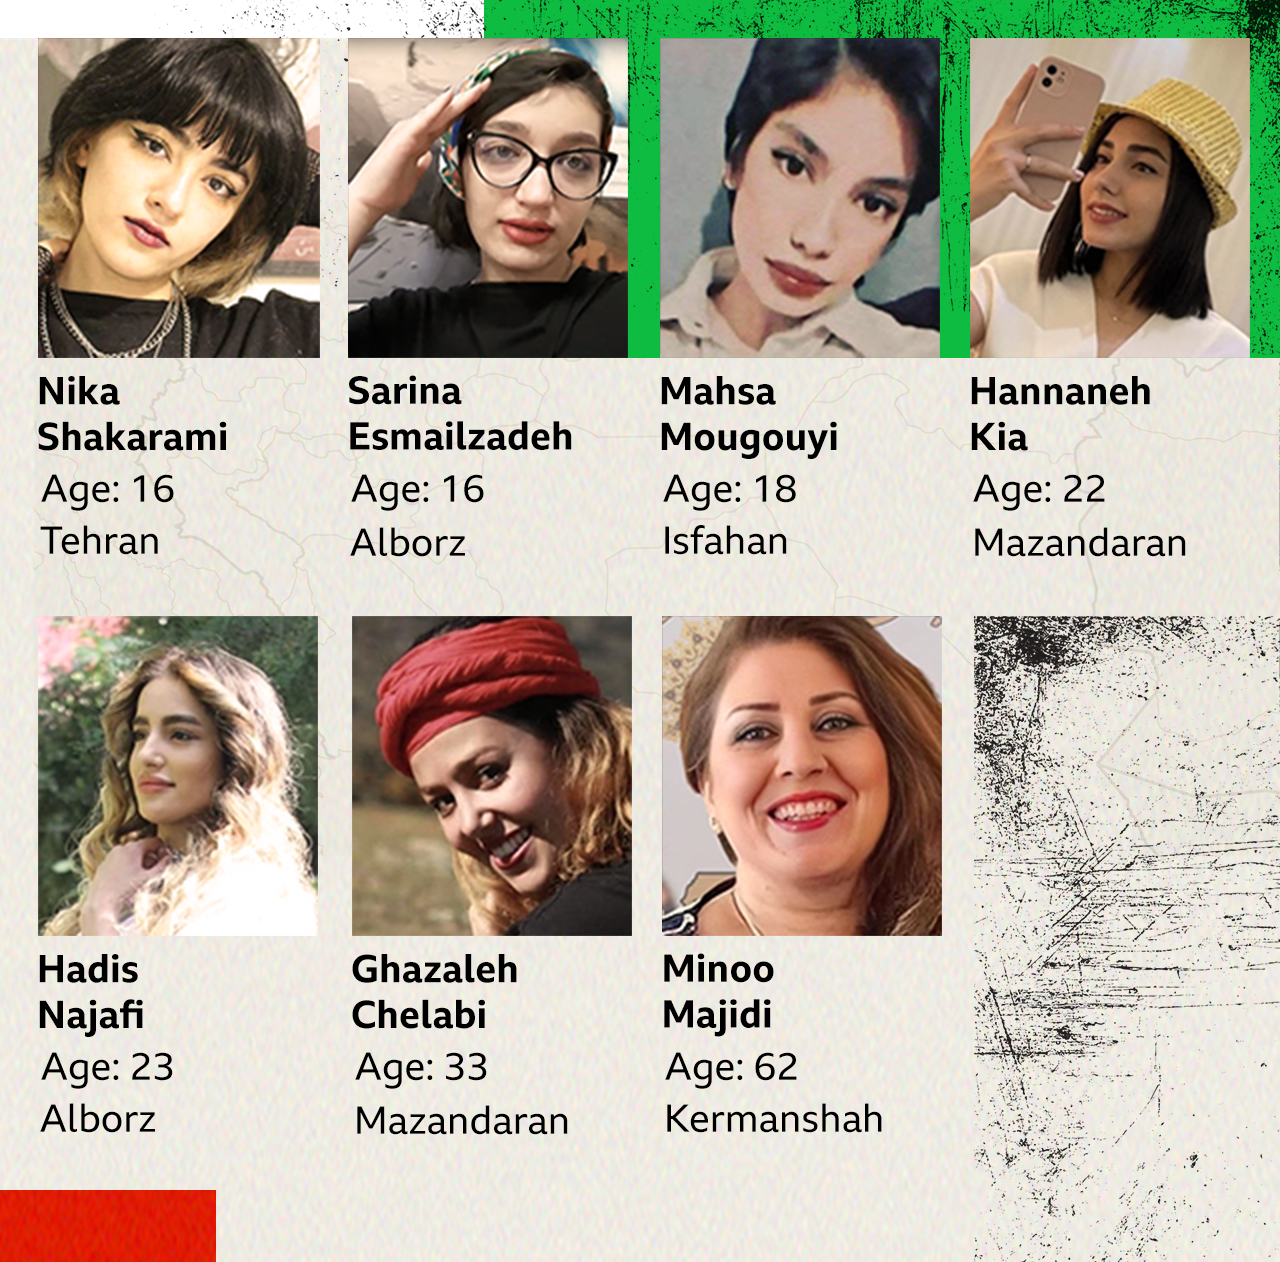 Victims identified: Minoo Majidi, Mahsa Mougouyi,, Hadis Najafi, Nika Shakarami, Sarina Esmailzadeh, Hannaneh Kia, Ghazaleh Chelabi